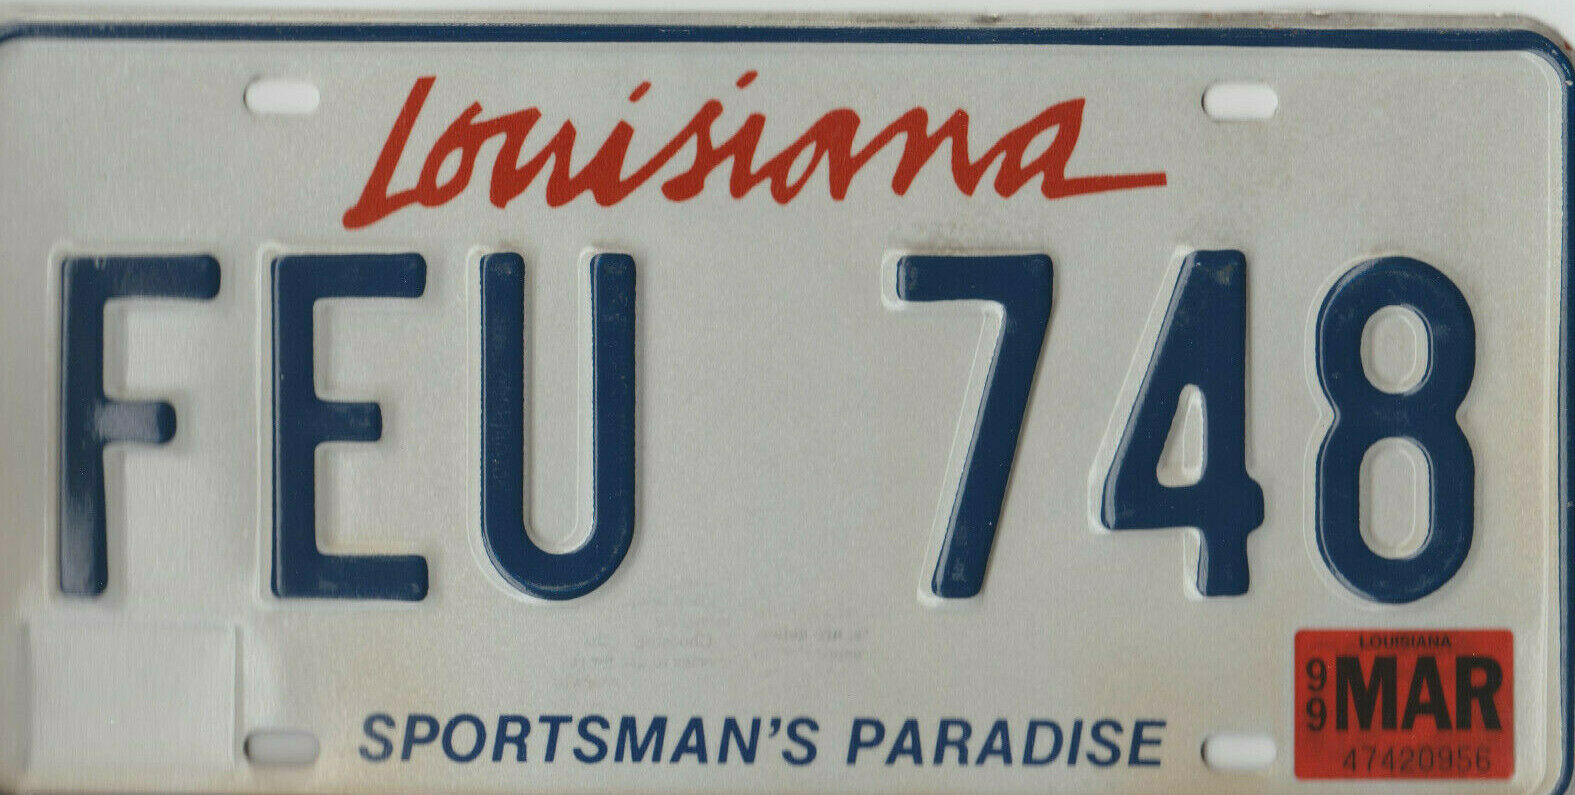 1999 Louisiana Embossed License Plate Feu 748 $15.99 No Reserve!